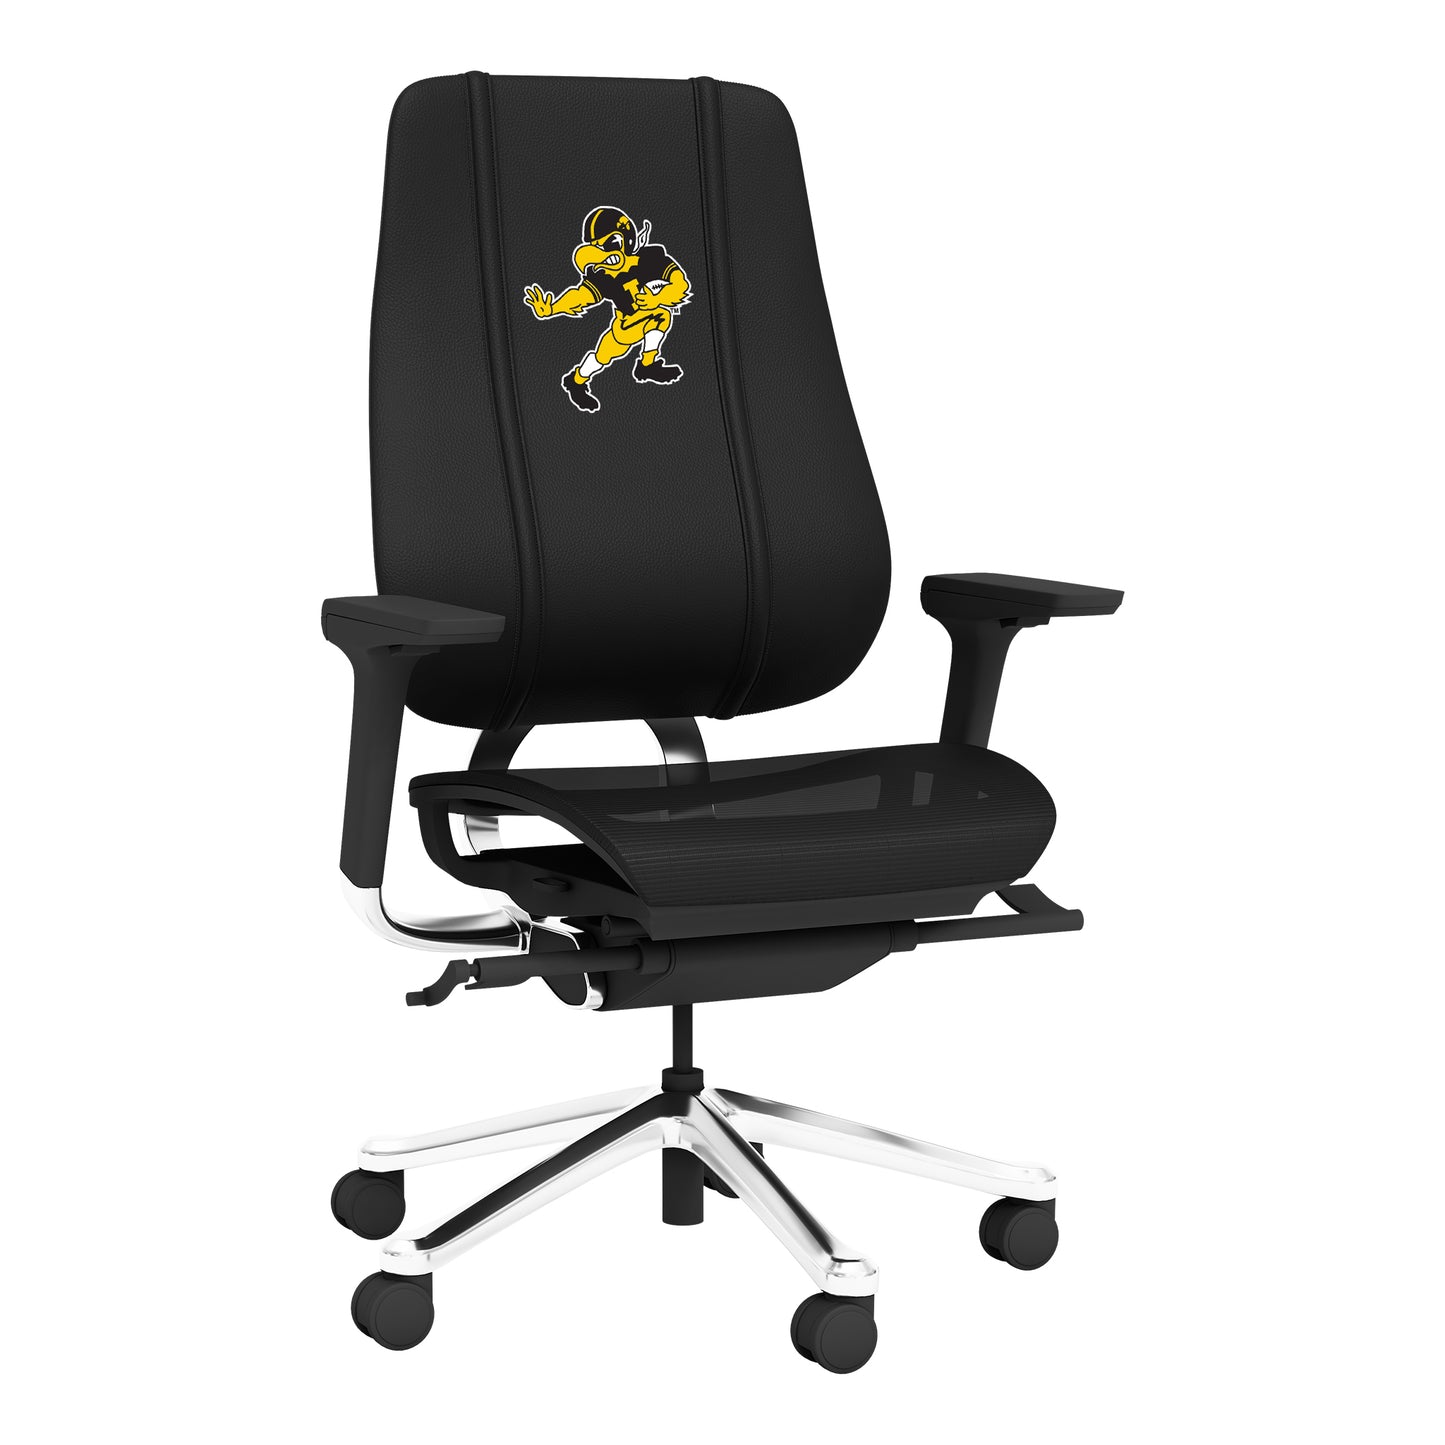 PhantomX Gaming Chair with Iowa Hawkeyes Football Herky Logo